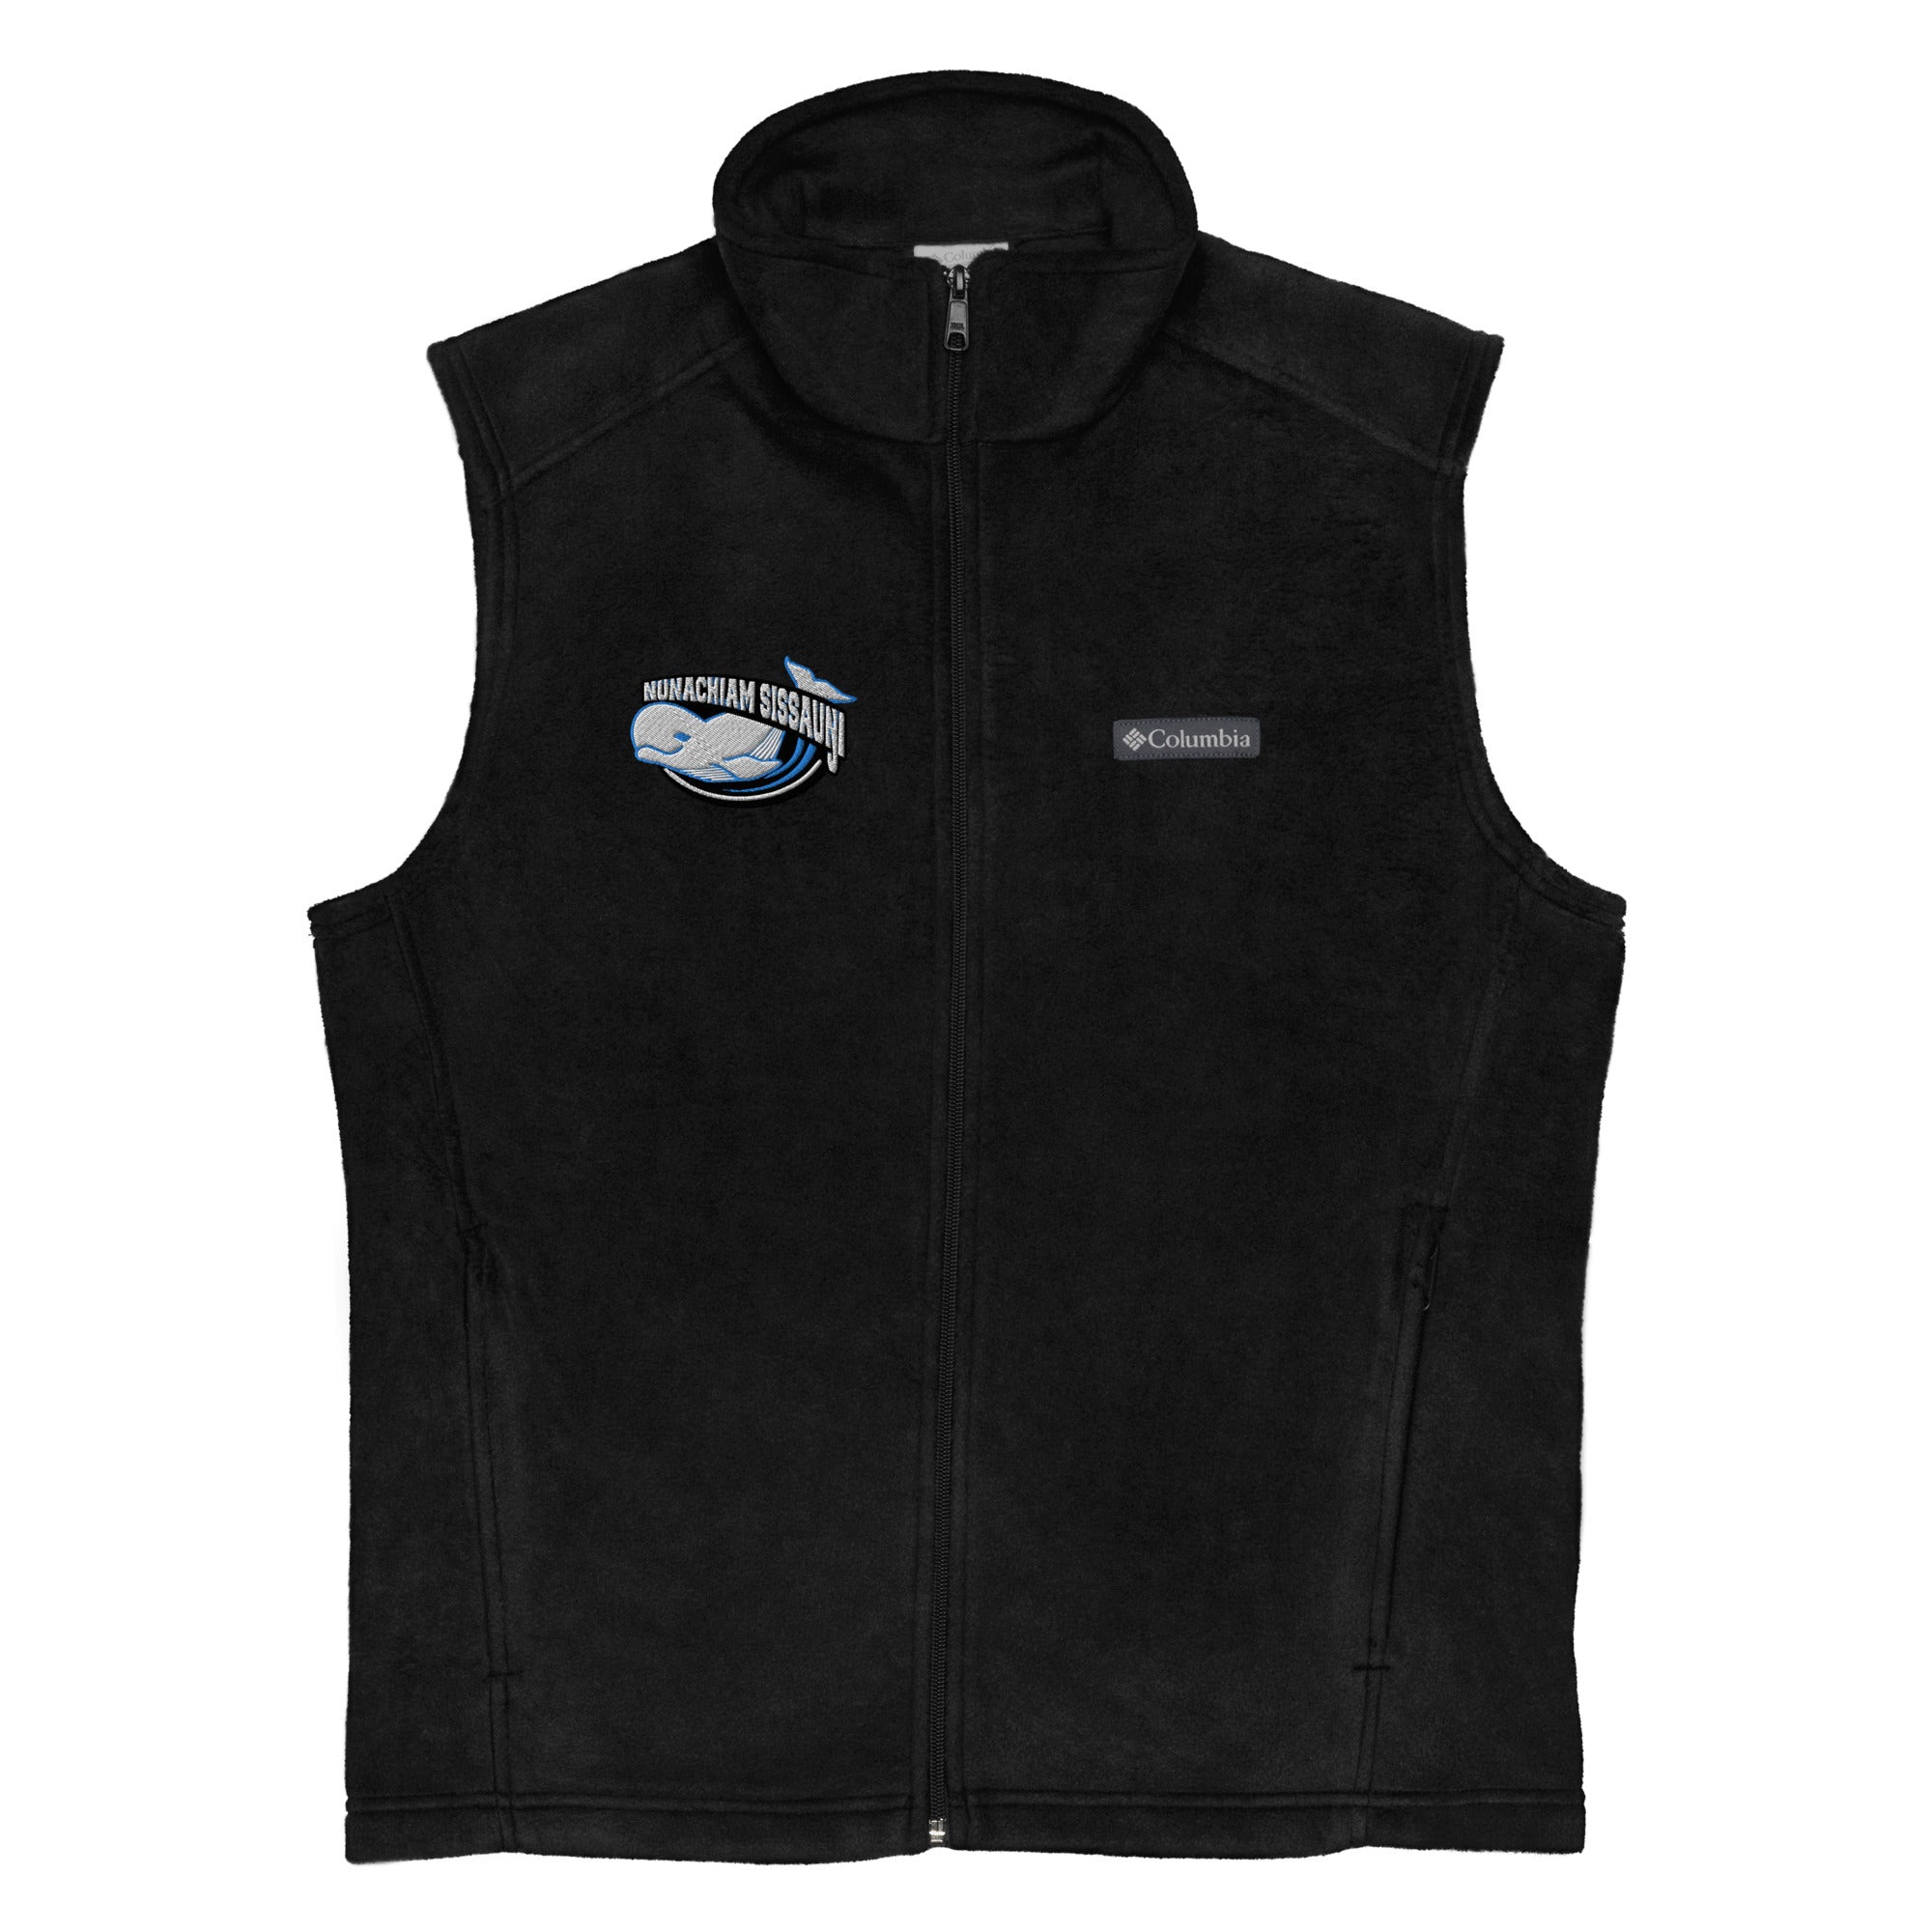 Buckland School NUNACHIAM SISSAUŊI Men’s Columbia fleece vest